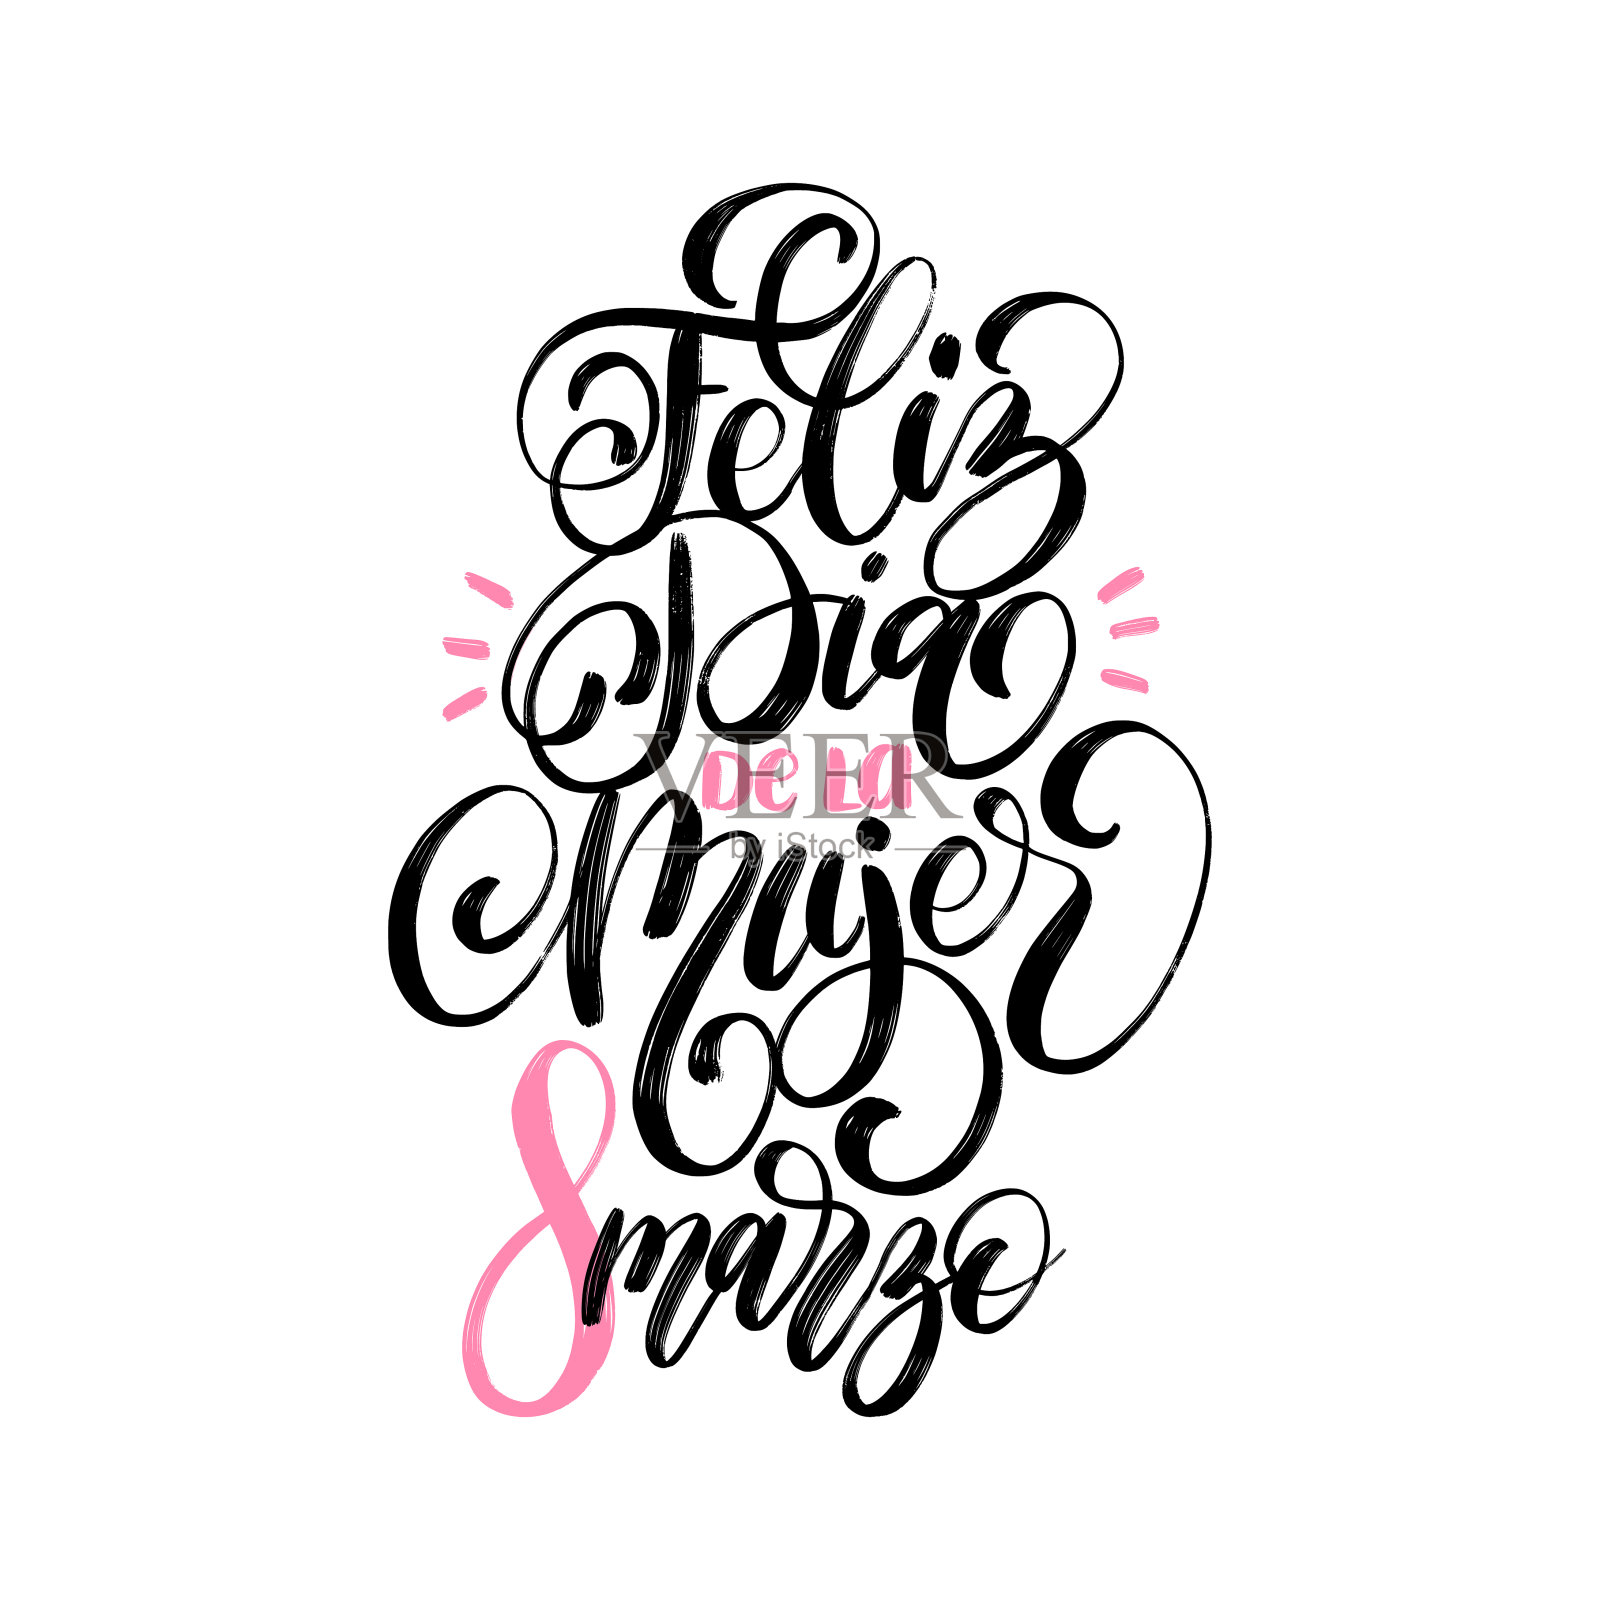 Feliz Dia De La Mujer从西班牙语翻译为“国际妇女节快乐”手写字母。插画图片素材